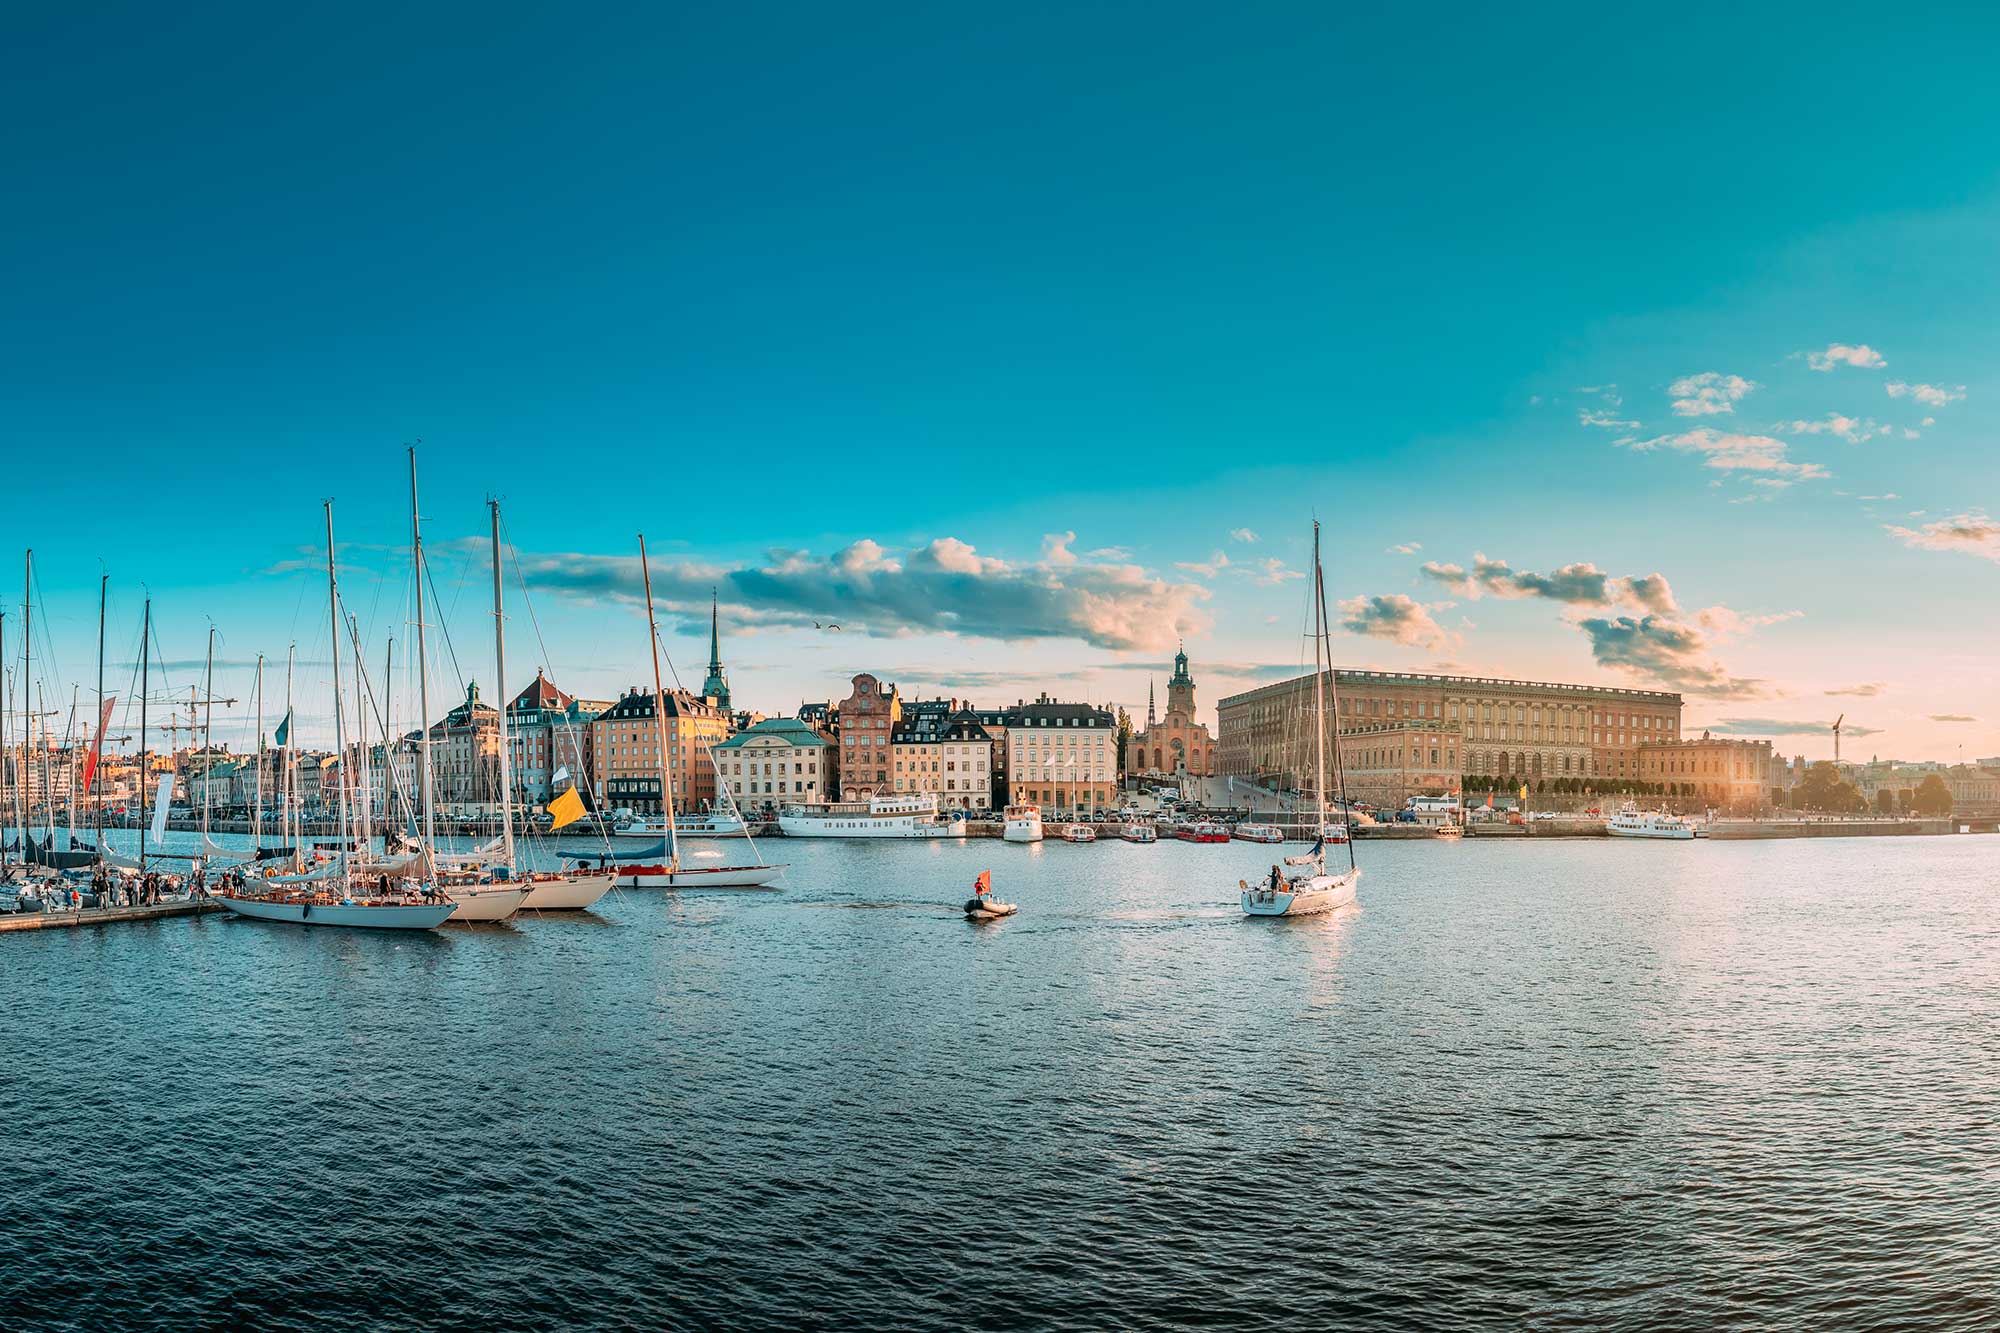 Sailboats in a harbor in Stockholm, Sweden.